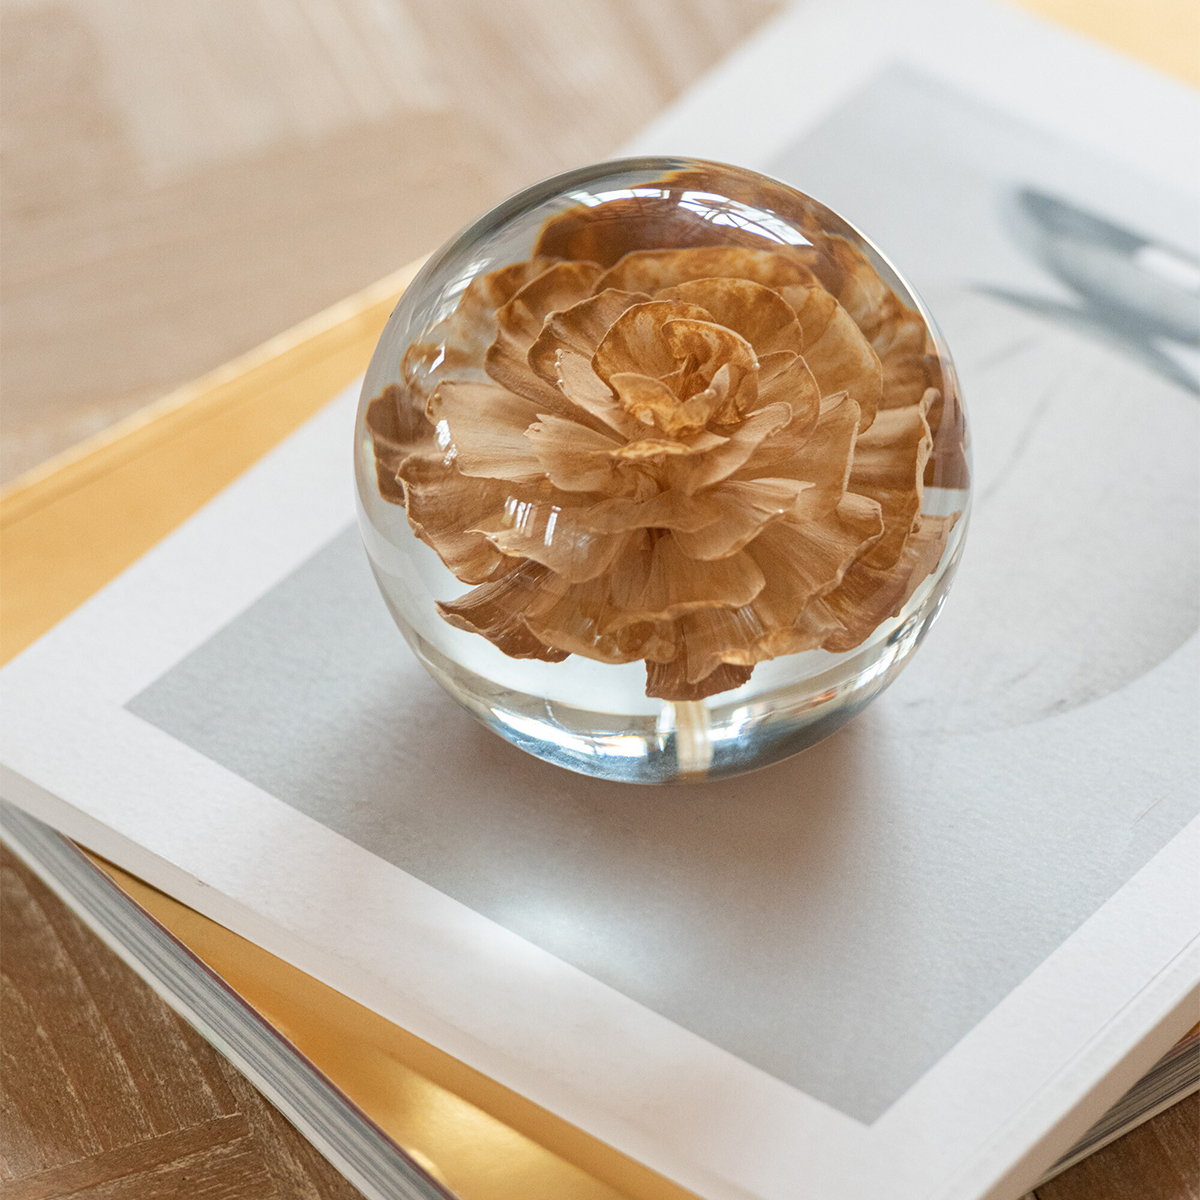 Paperweight glass flower 8 cm